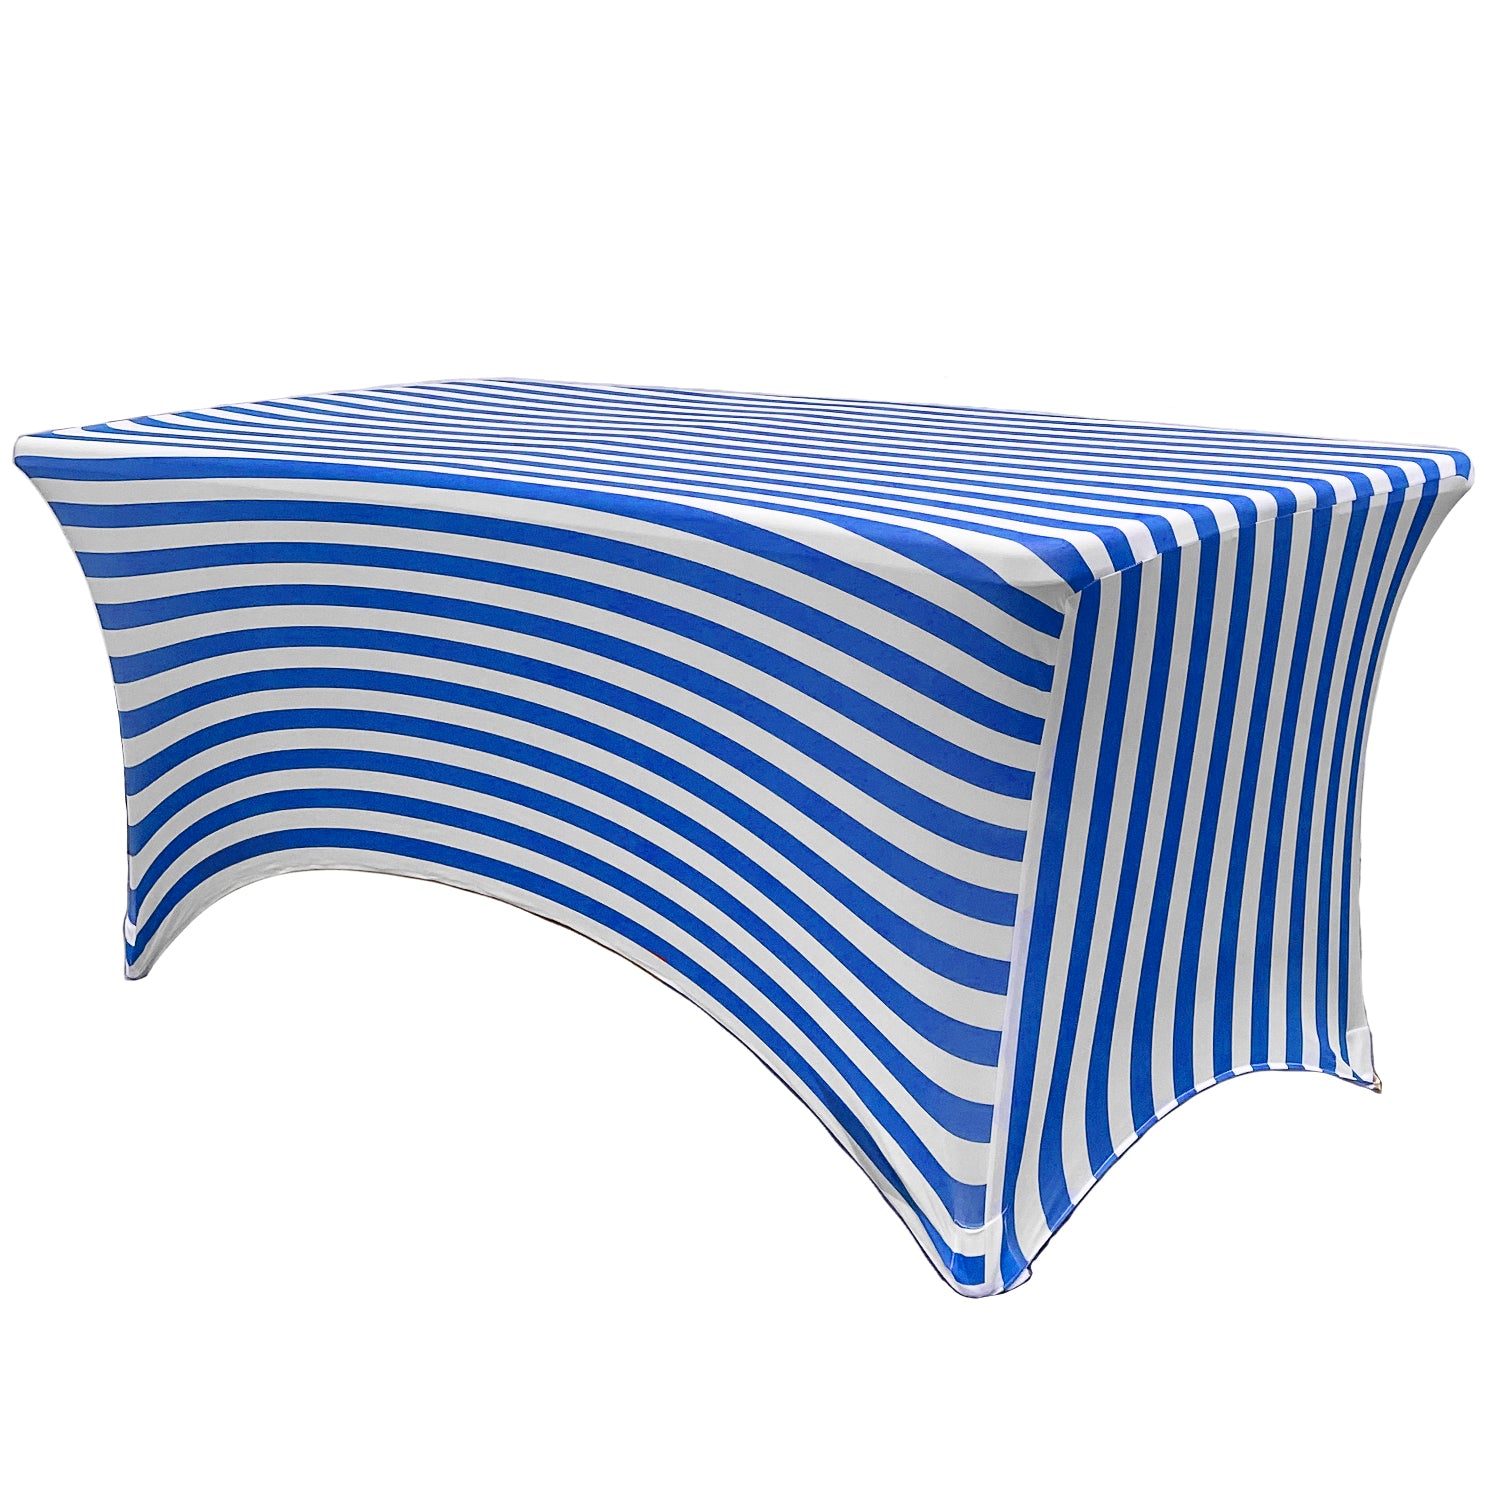 Buy Casino Shiny Royal Blue Spandex 4 Way Stretch Wholesale Satin Fabric